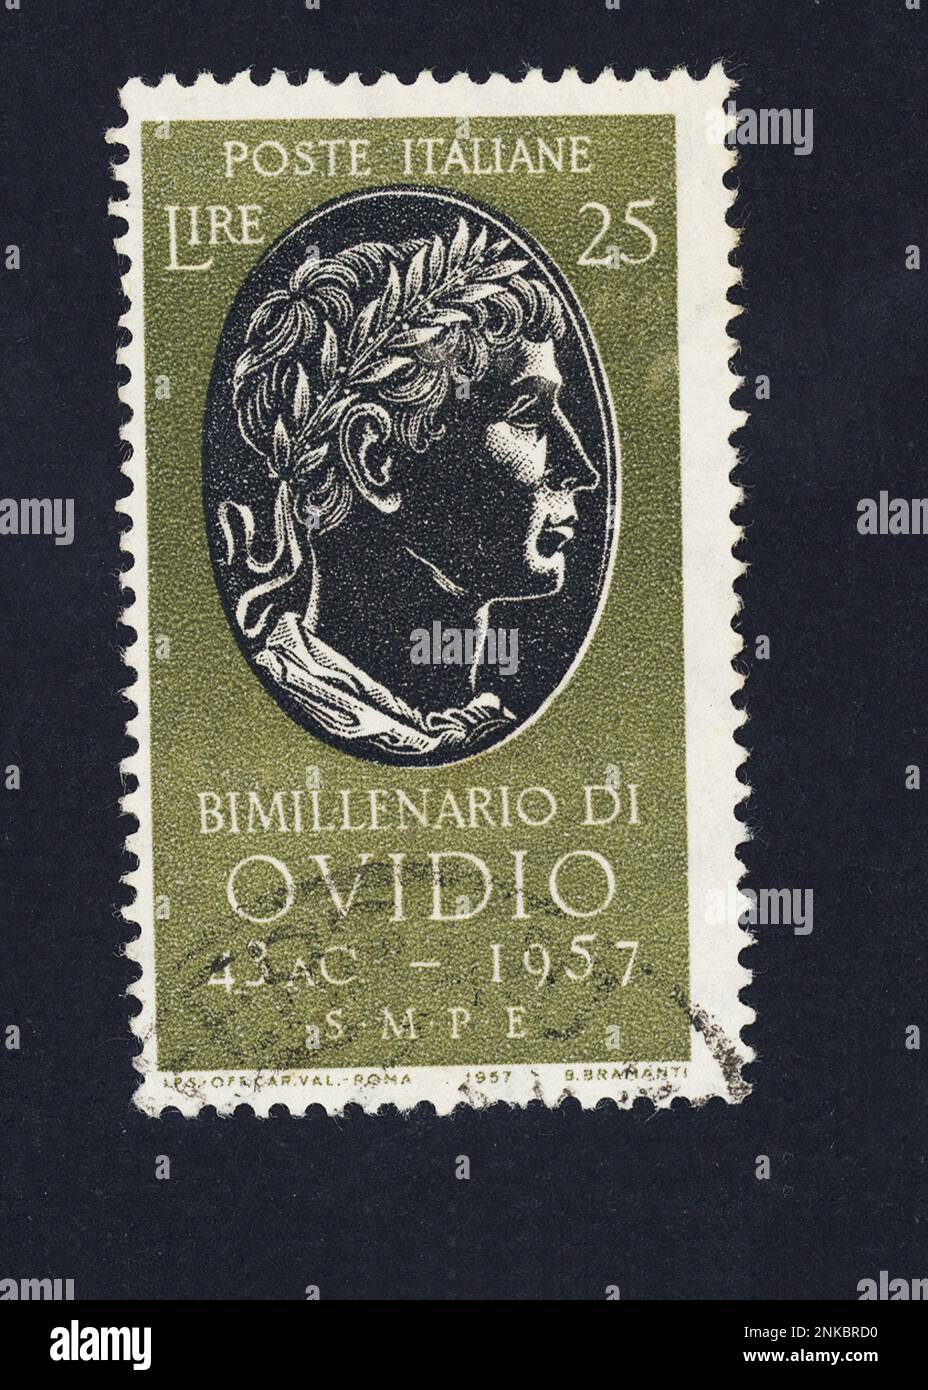 The latin poet Publio OVIDIO Nasone ( sulmona 43 b.C- Tomi 17 a.C )  . Post Stamp Timber from italian post service 1957 - POETA LATINO - POESIA - POETRY  -  francobollo commemorativo   ----  Archivio GBB Stock Photo